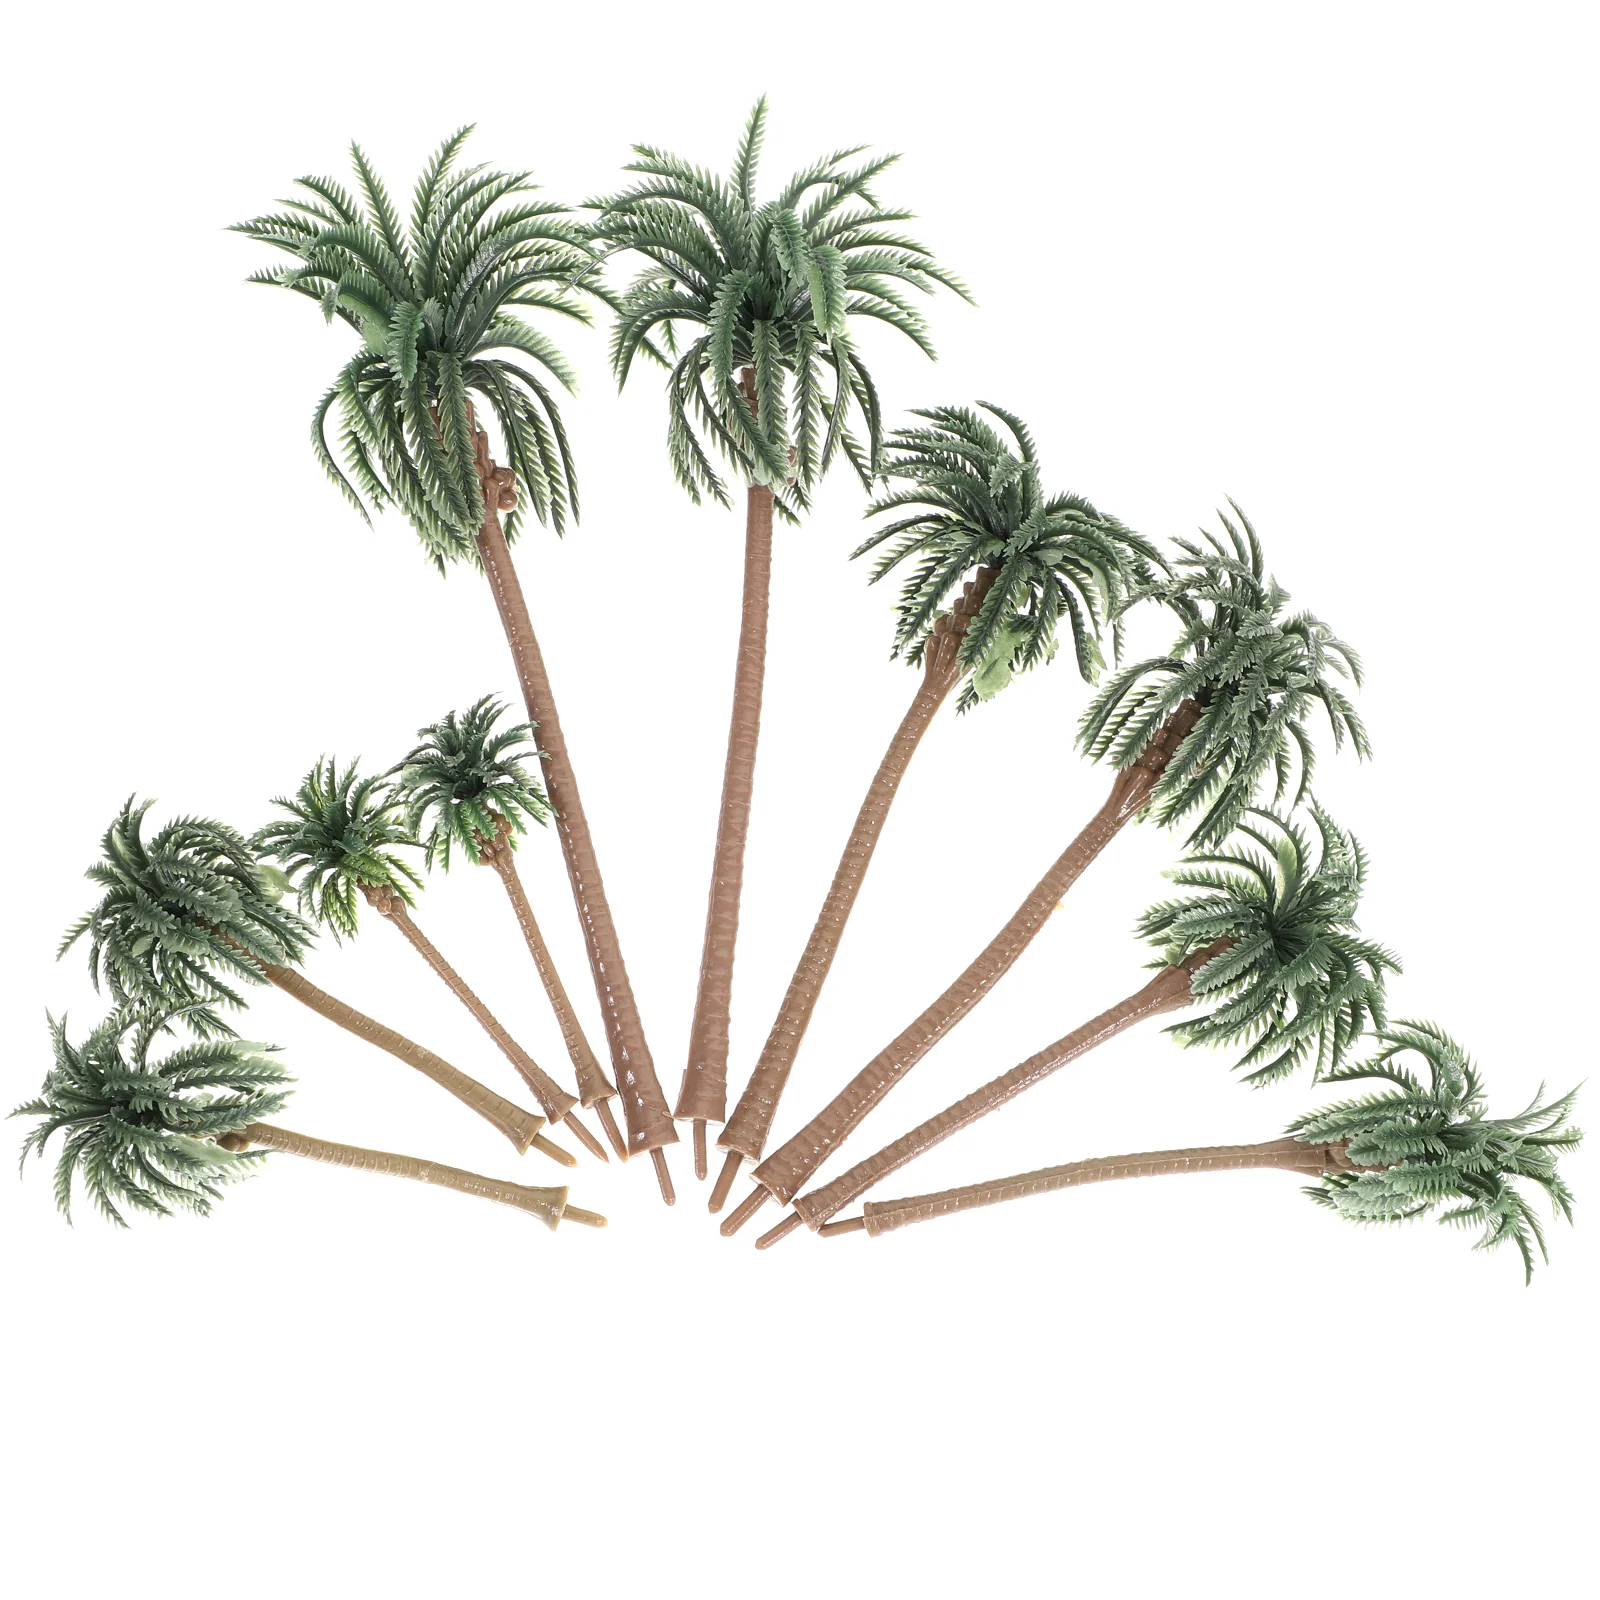 

10 Pcs Rainforest Plastic Palm Tree Model Layout Props Tropical Scenery DIY Handmade Material Mini Coconut Tree Model Green